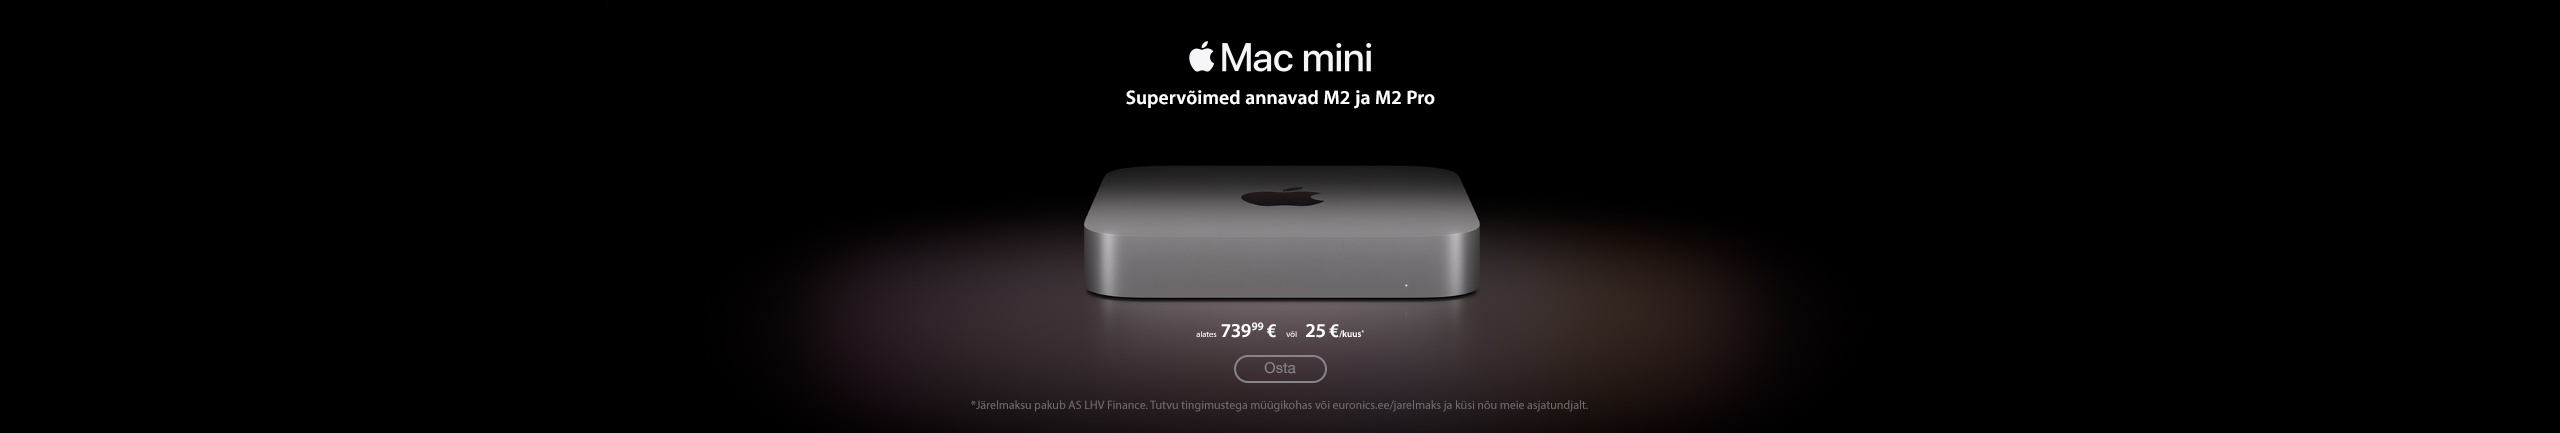 New Apple iMac mini now available